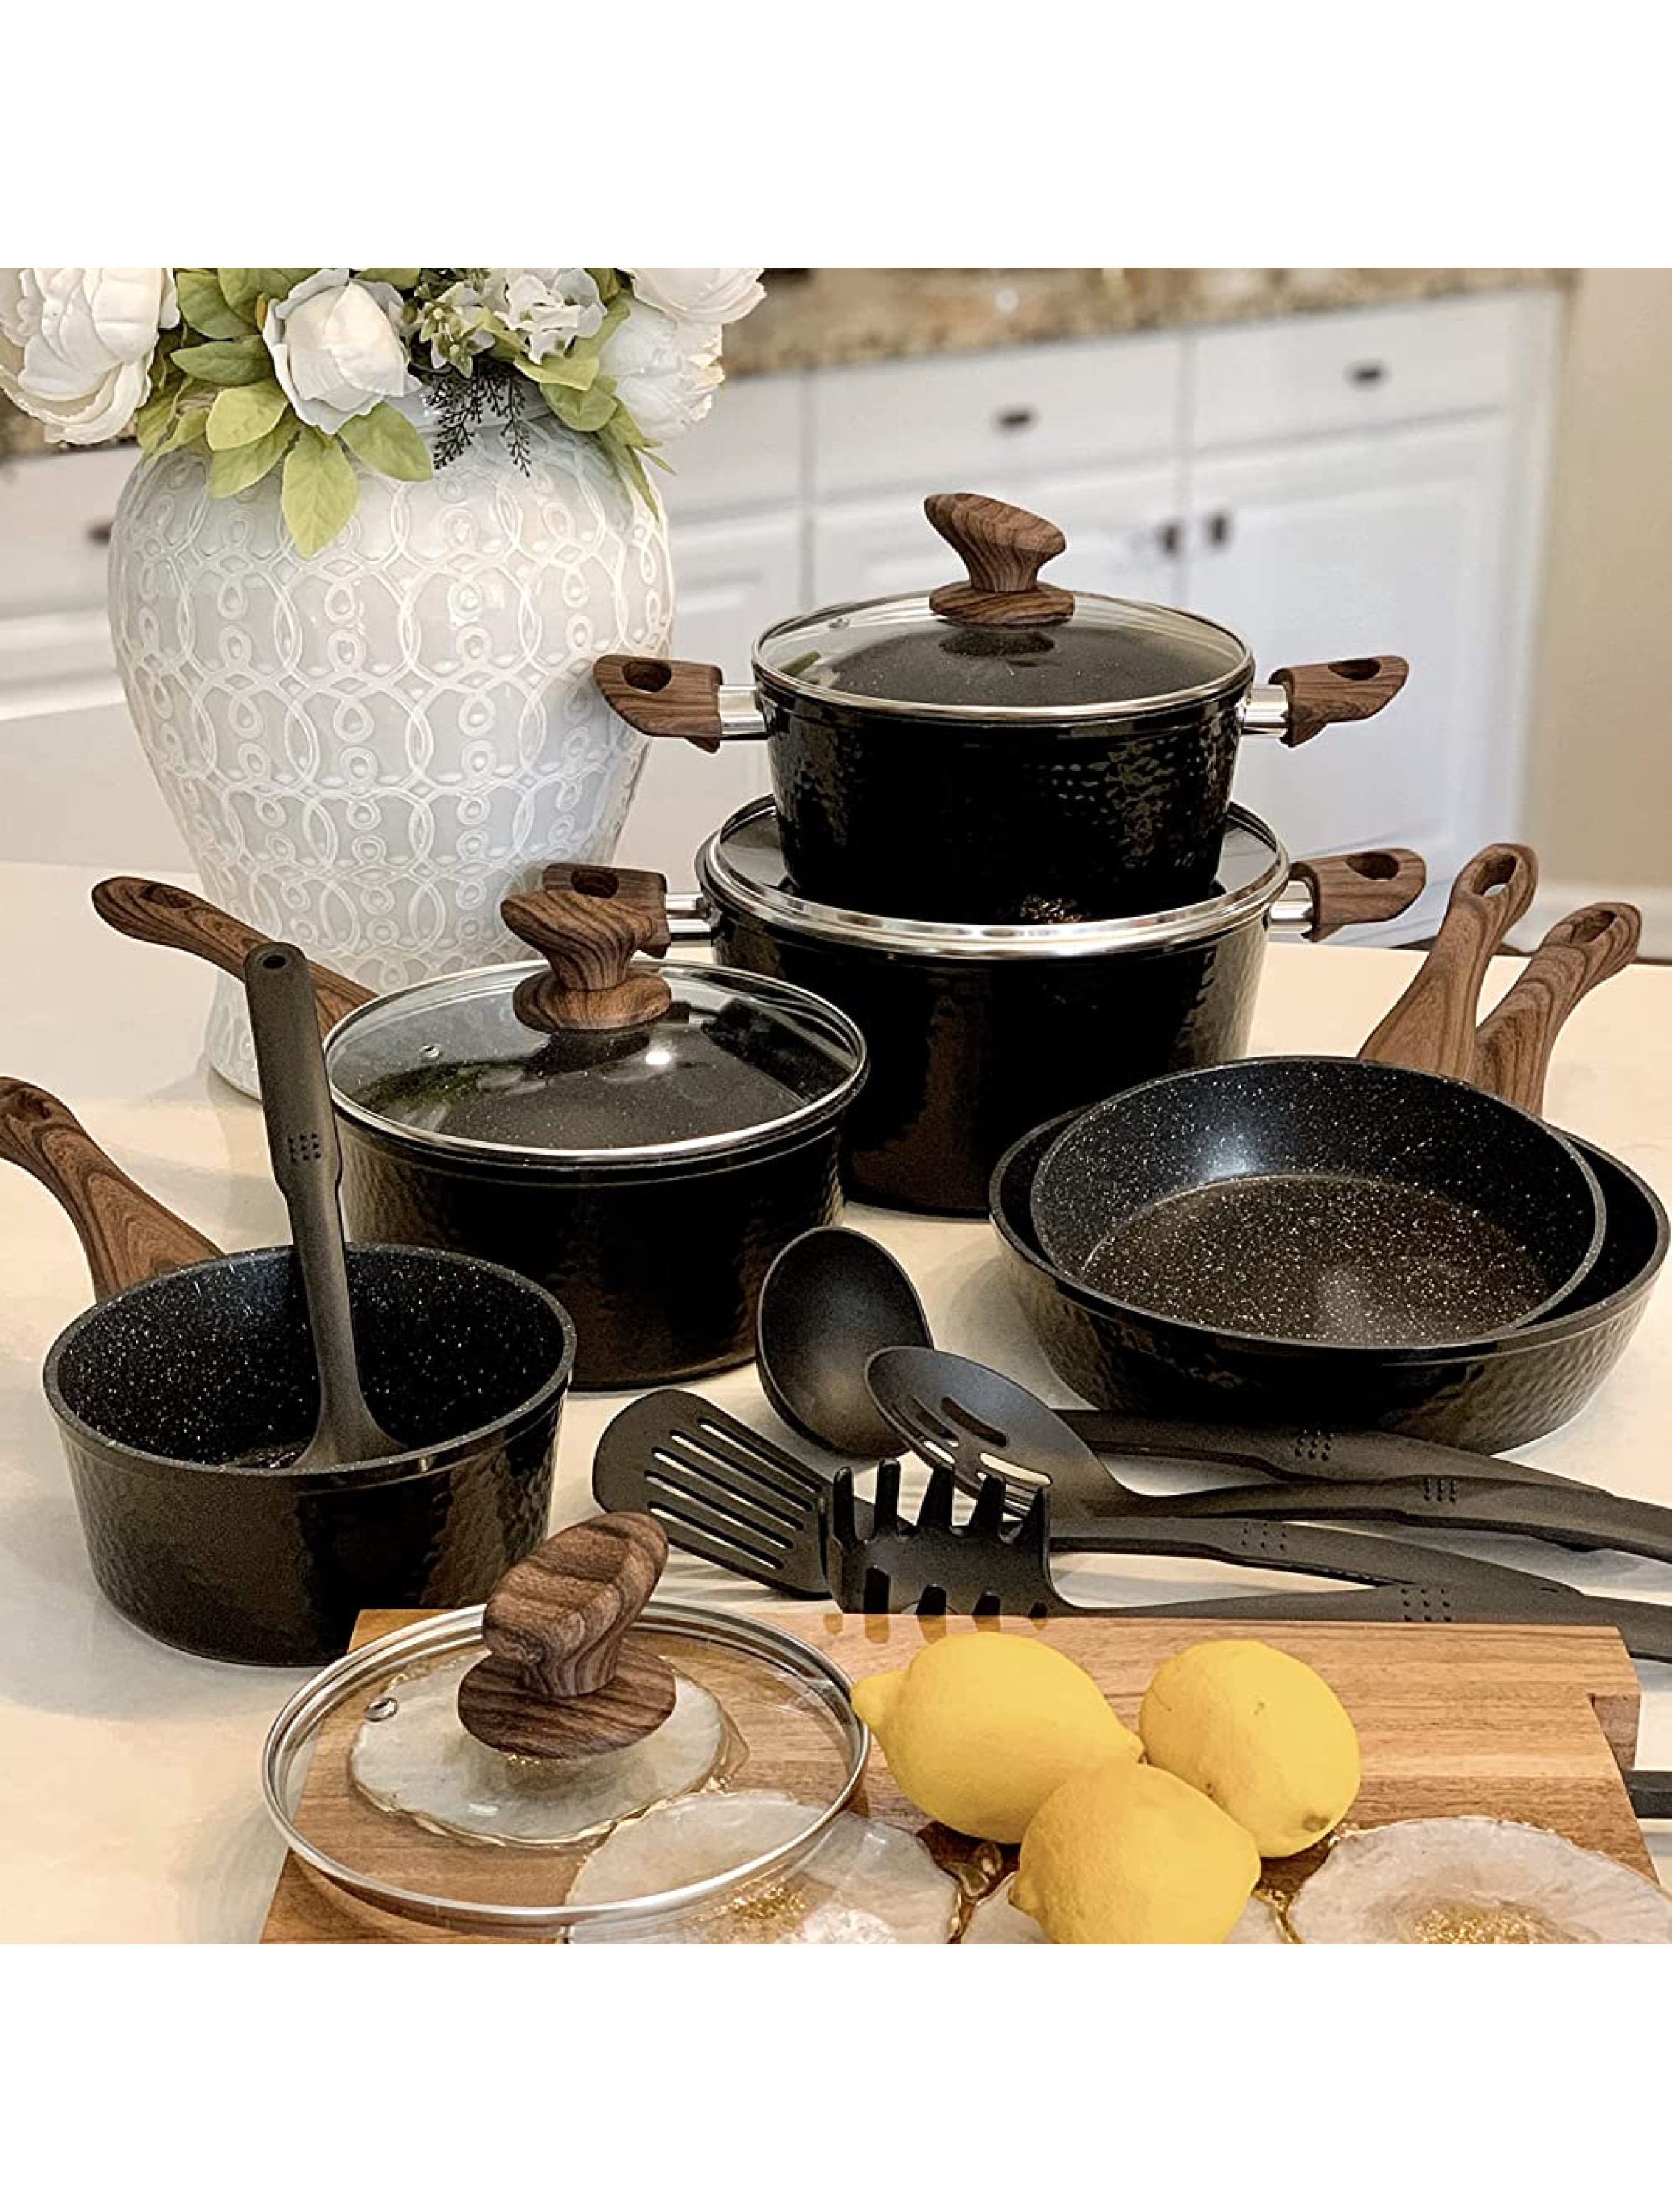 Induction Kitchen Cookware Sets Nonstick Granite Hammered Pan Set Dishwasher Safe Cooking Pots and Pans Set - BQNXHD4DQ